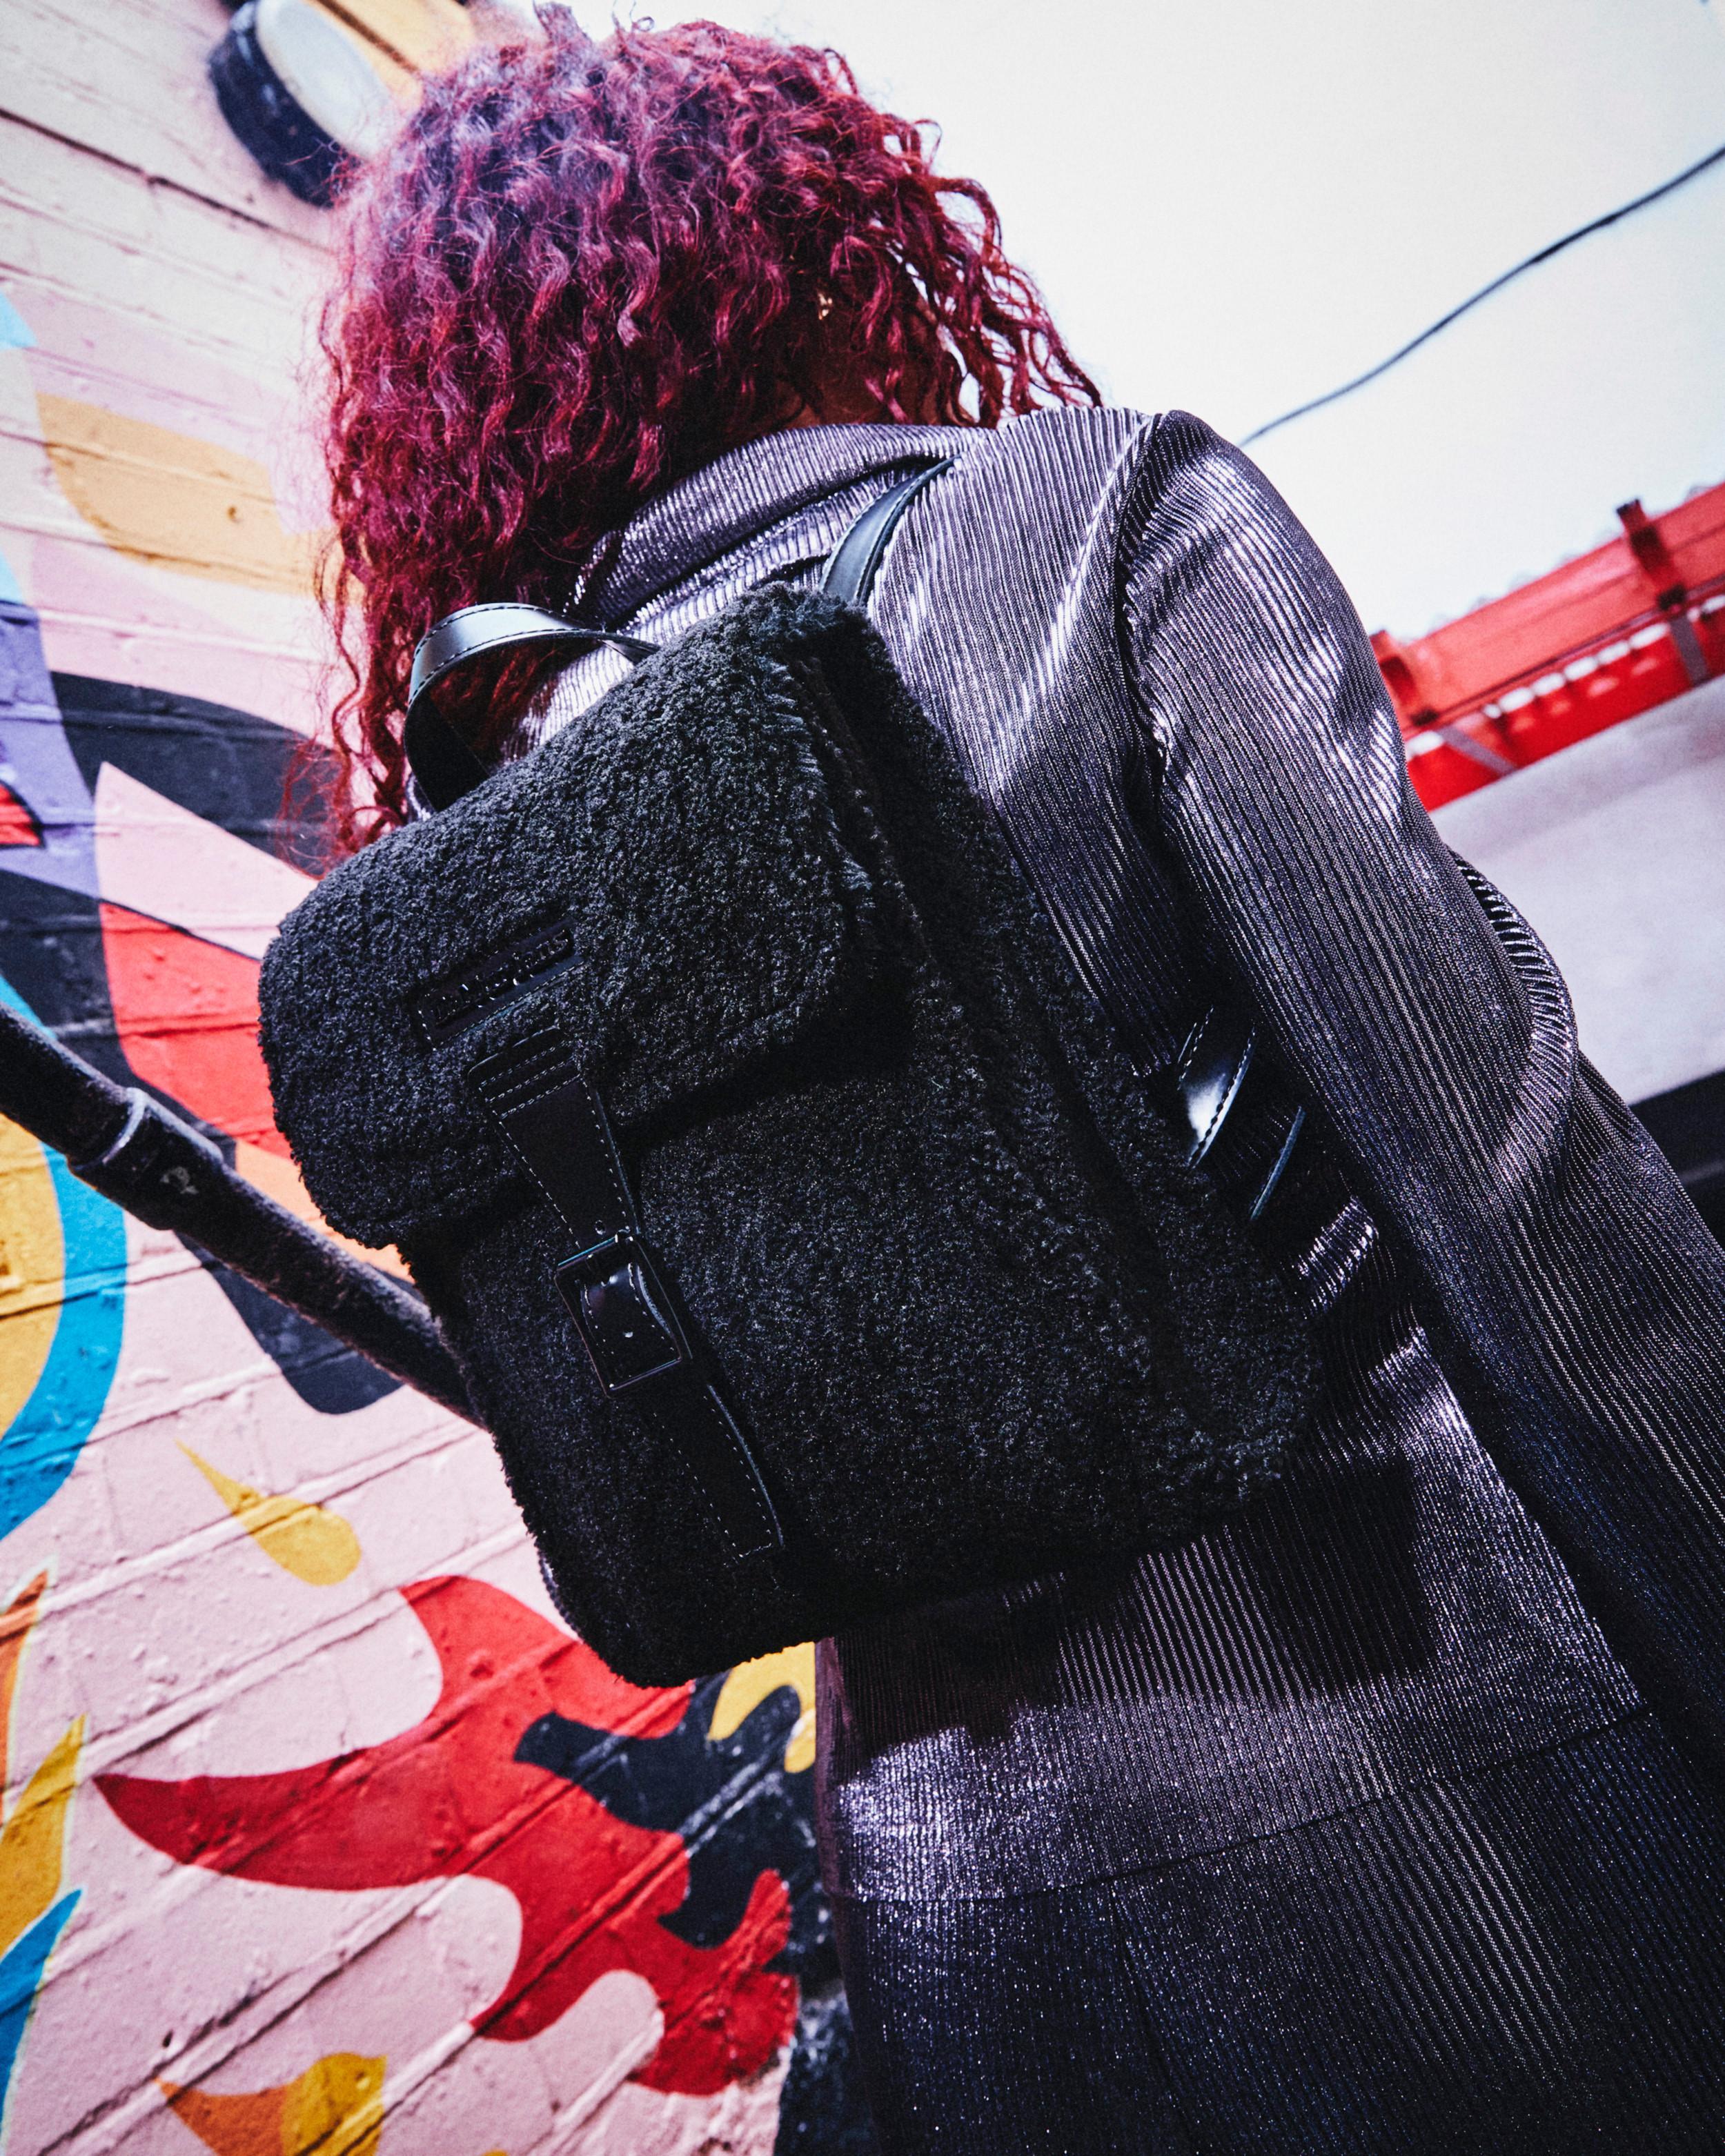 Kiev Smooth Leather Mini Backpack, Black